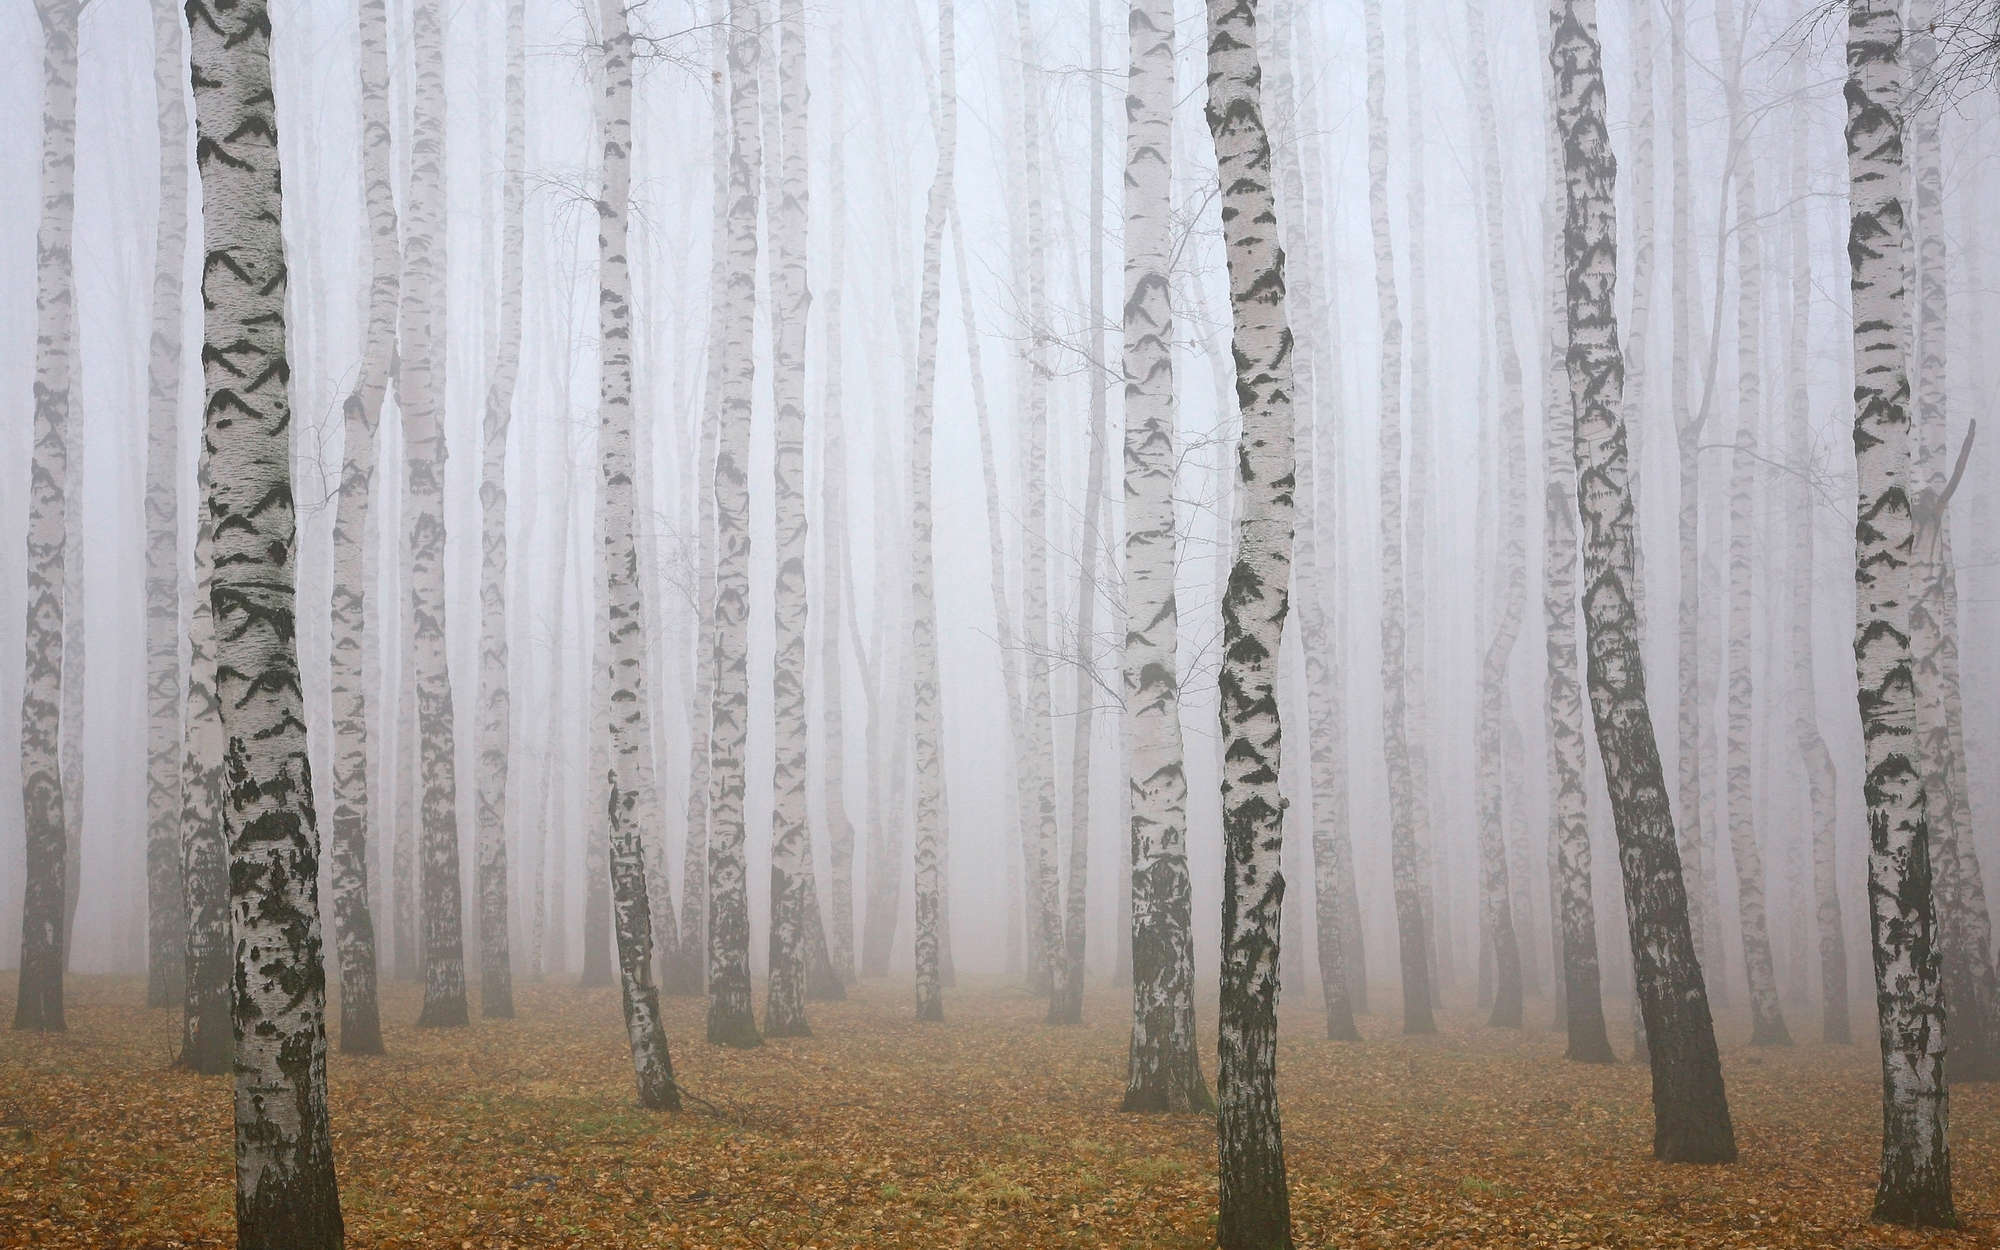             Birch Forest in the Mist Wallpaper - Matt Smooth Non-woven
        